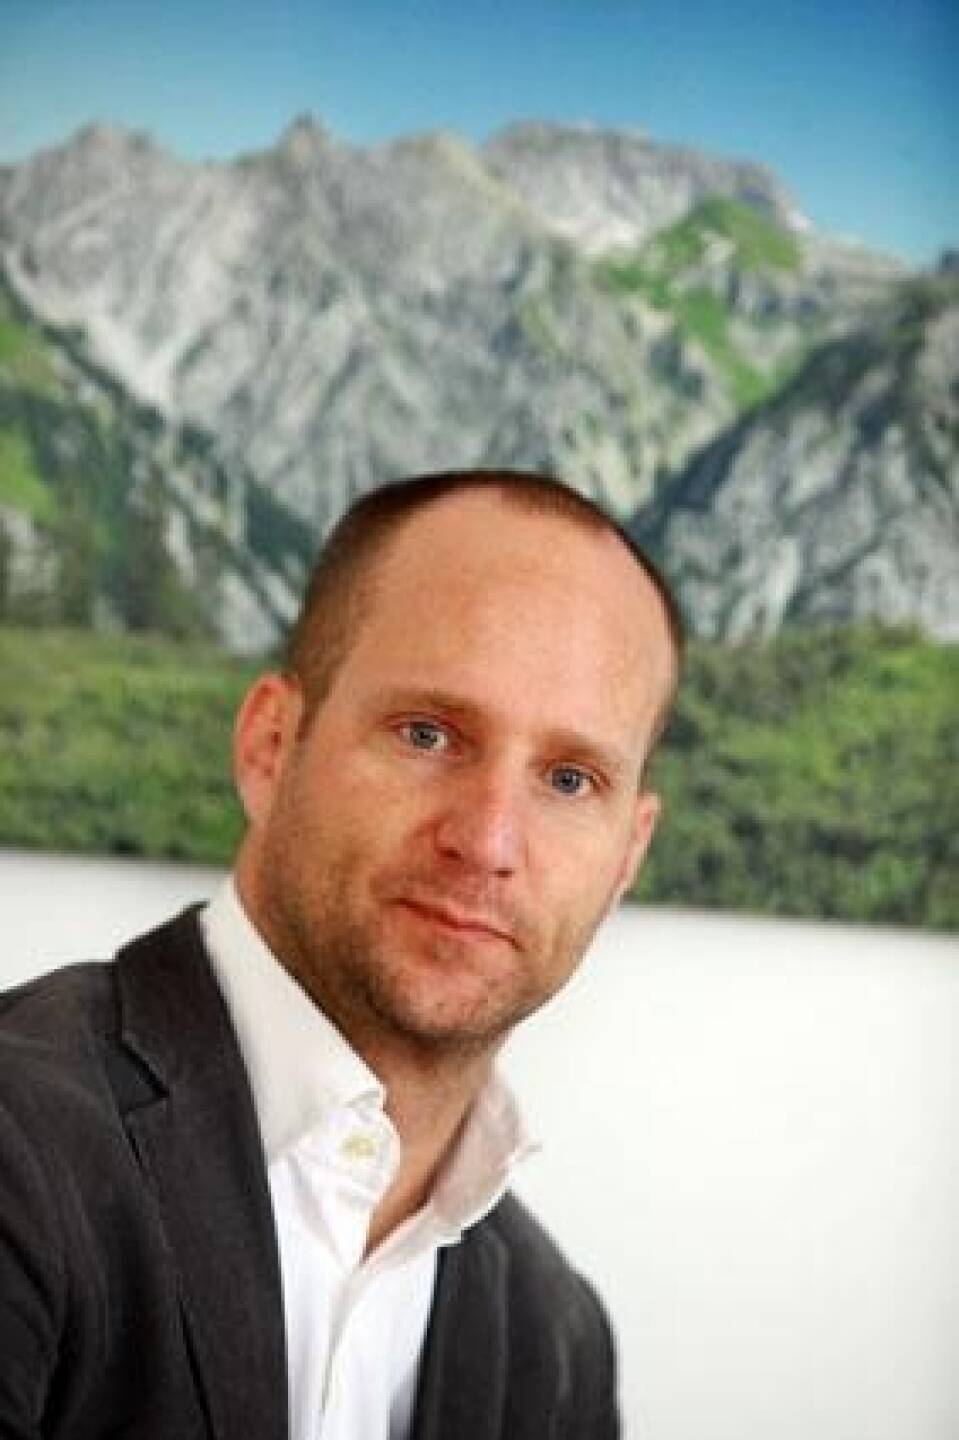 Matthias Strolz, Neos (10.Juni) - finanzmarktfoto.at wünscht alles Gute!